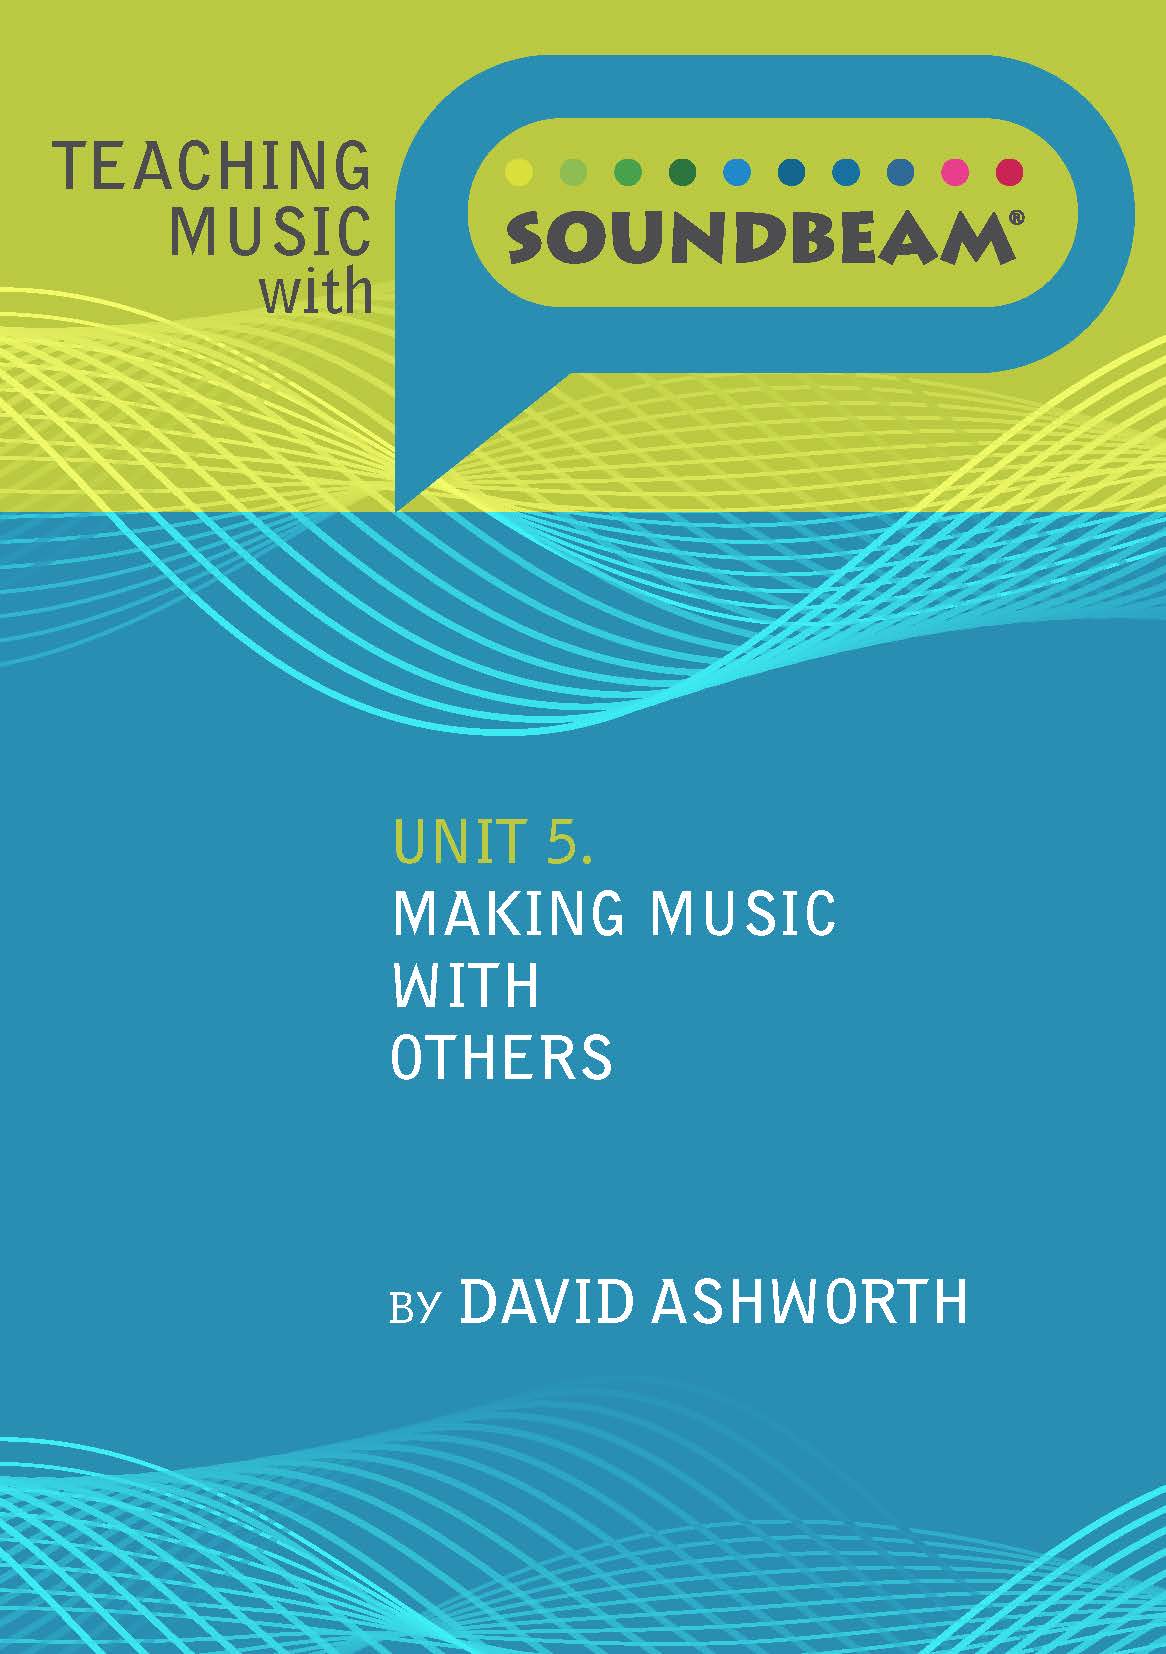 Teaching music with Soundbeam